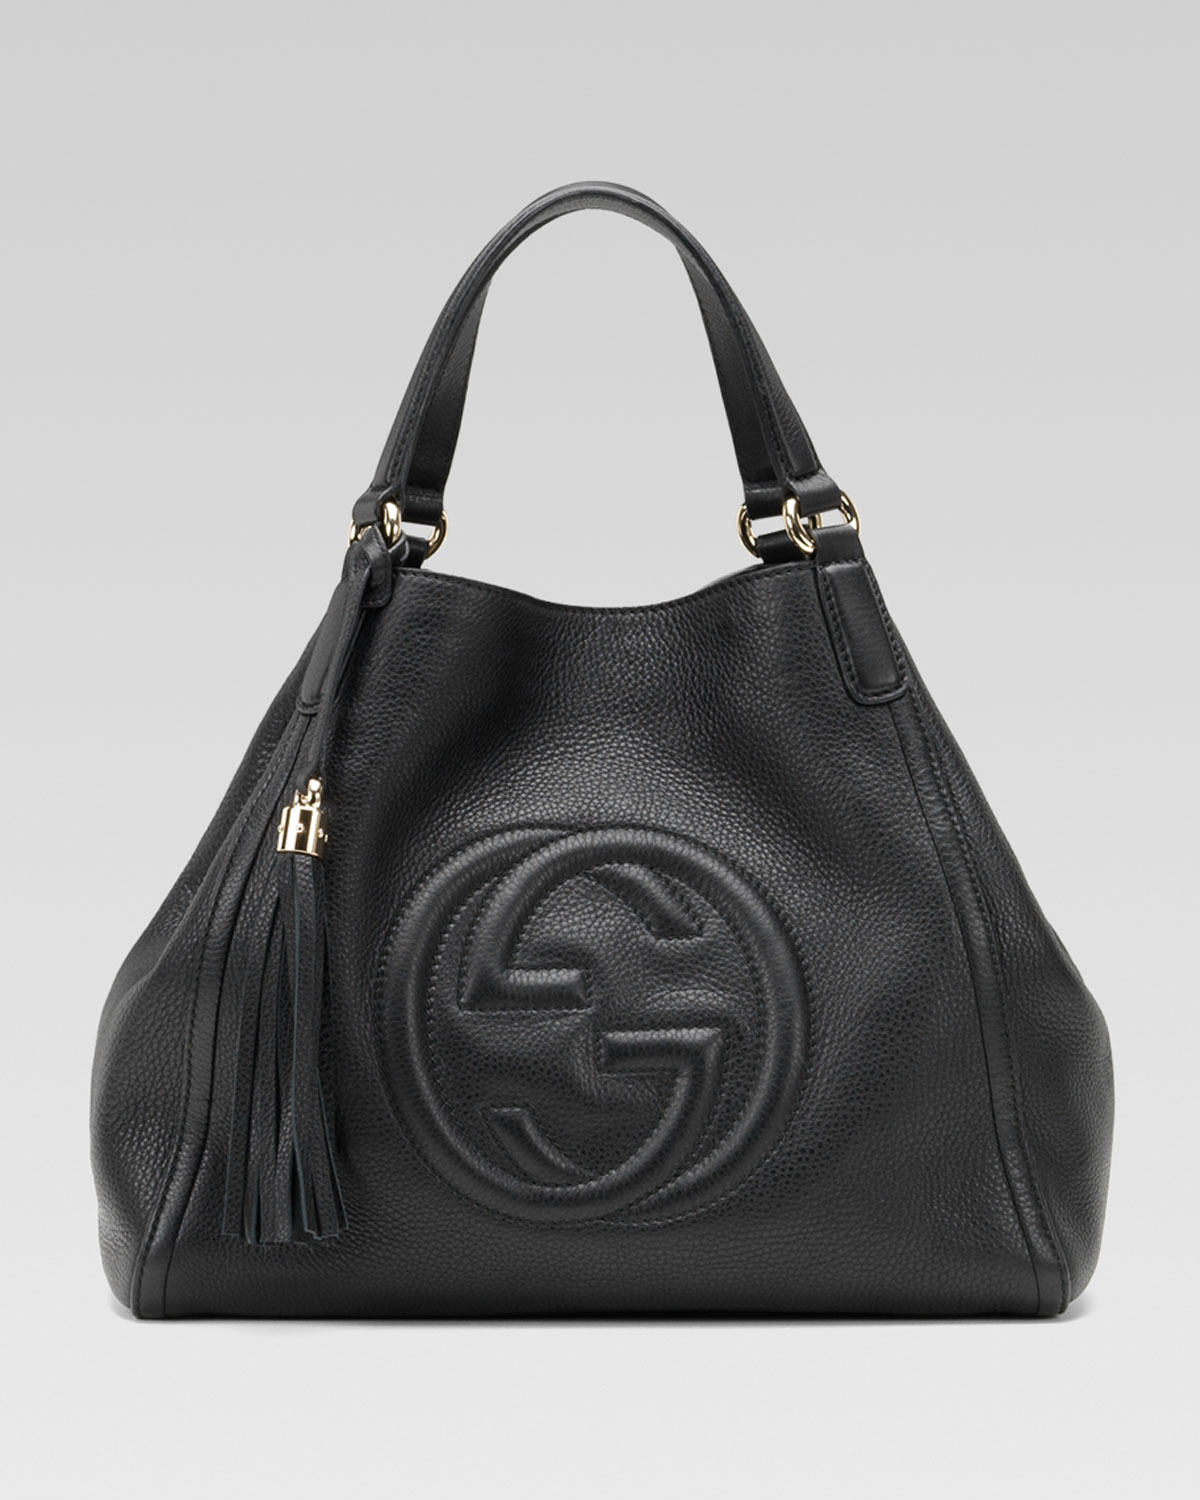 Gucci Soho Medium Hobo Bag in Black - Lyst